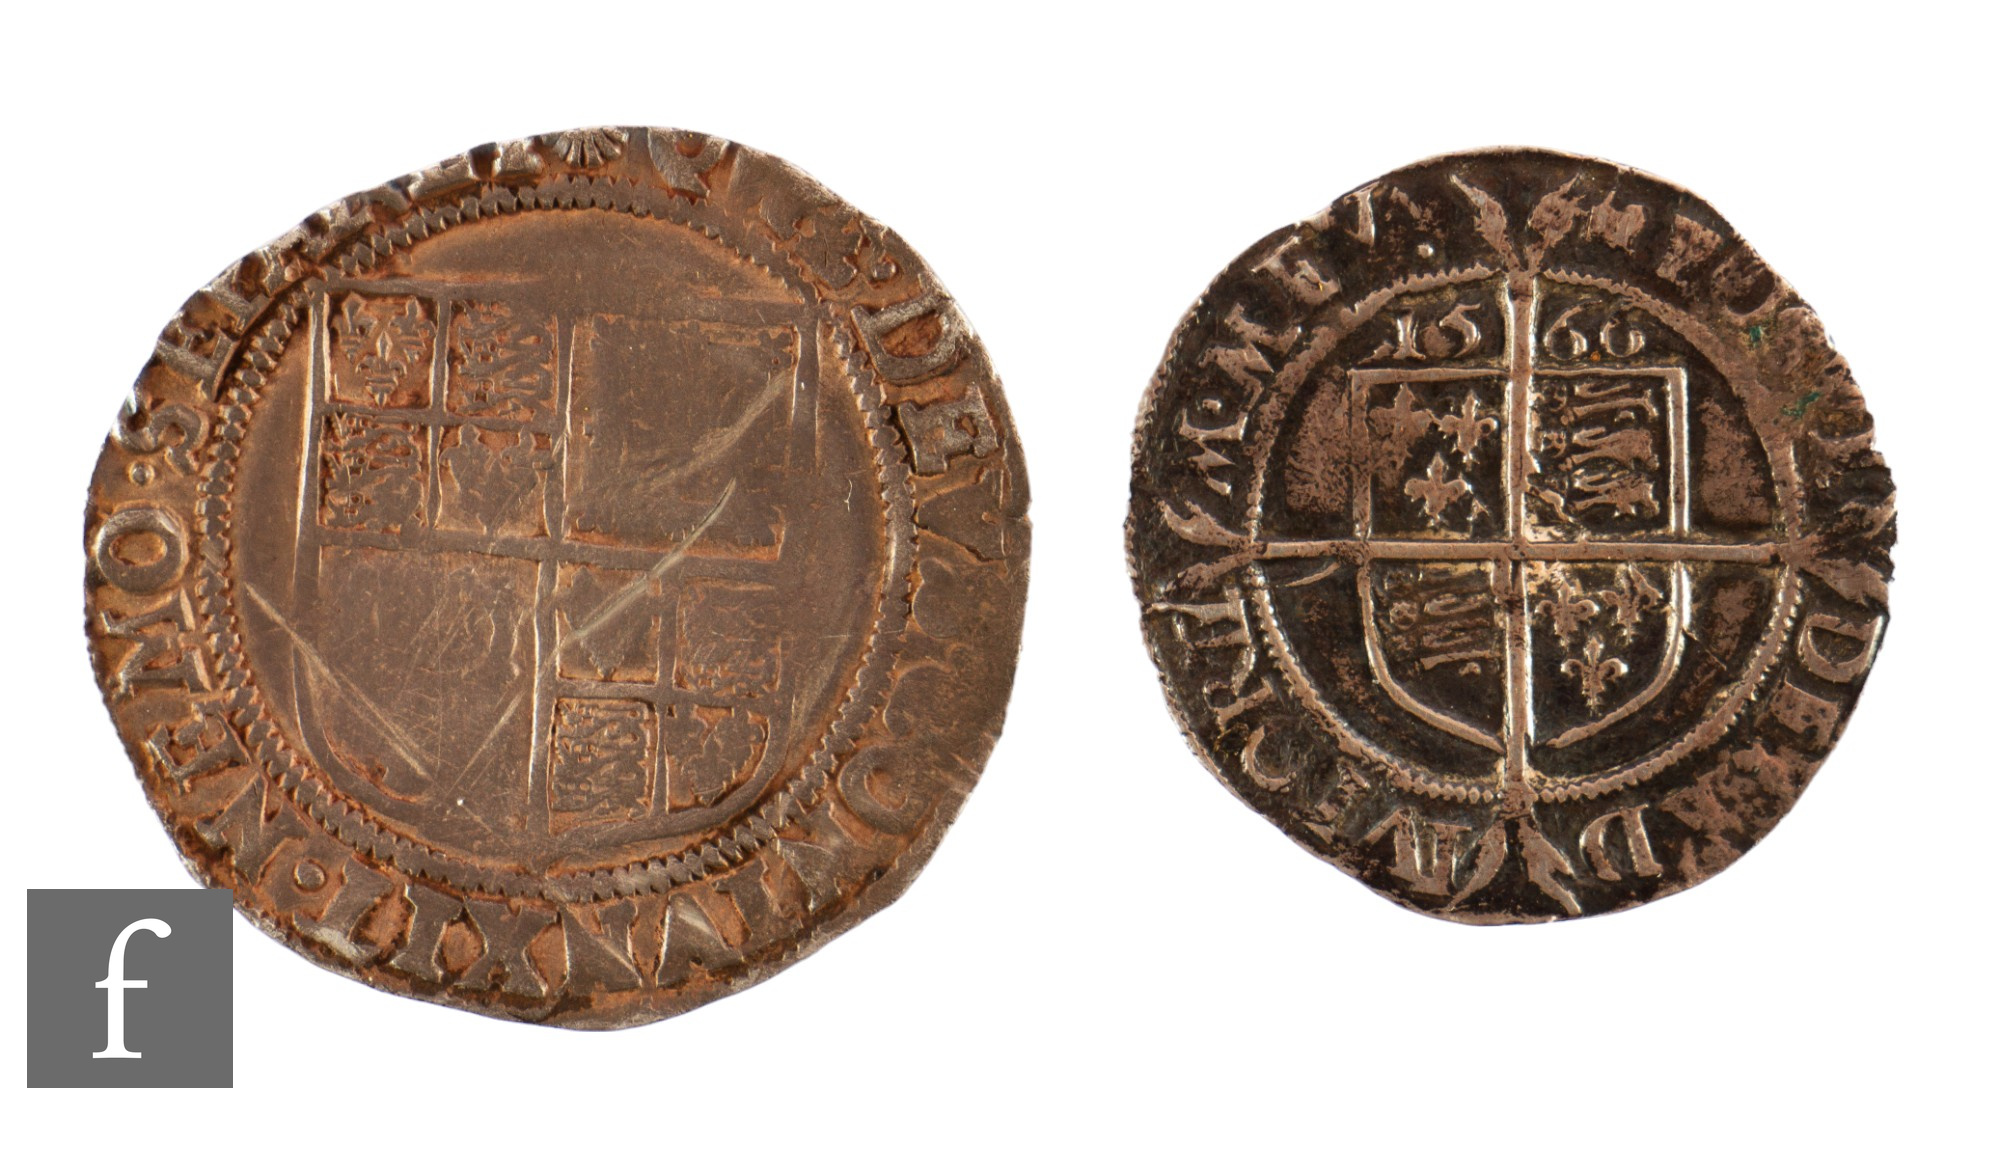 Elizabeth I to James I - An Elizabeth I 1566 sixpence and a James I shilling. (2) - Image 2 of 2